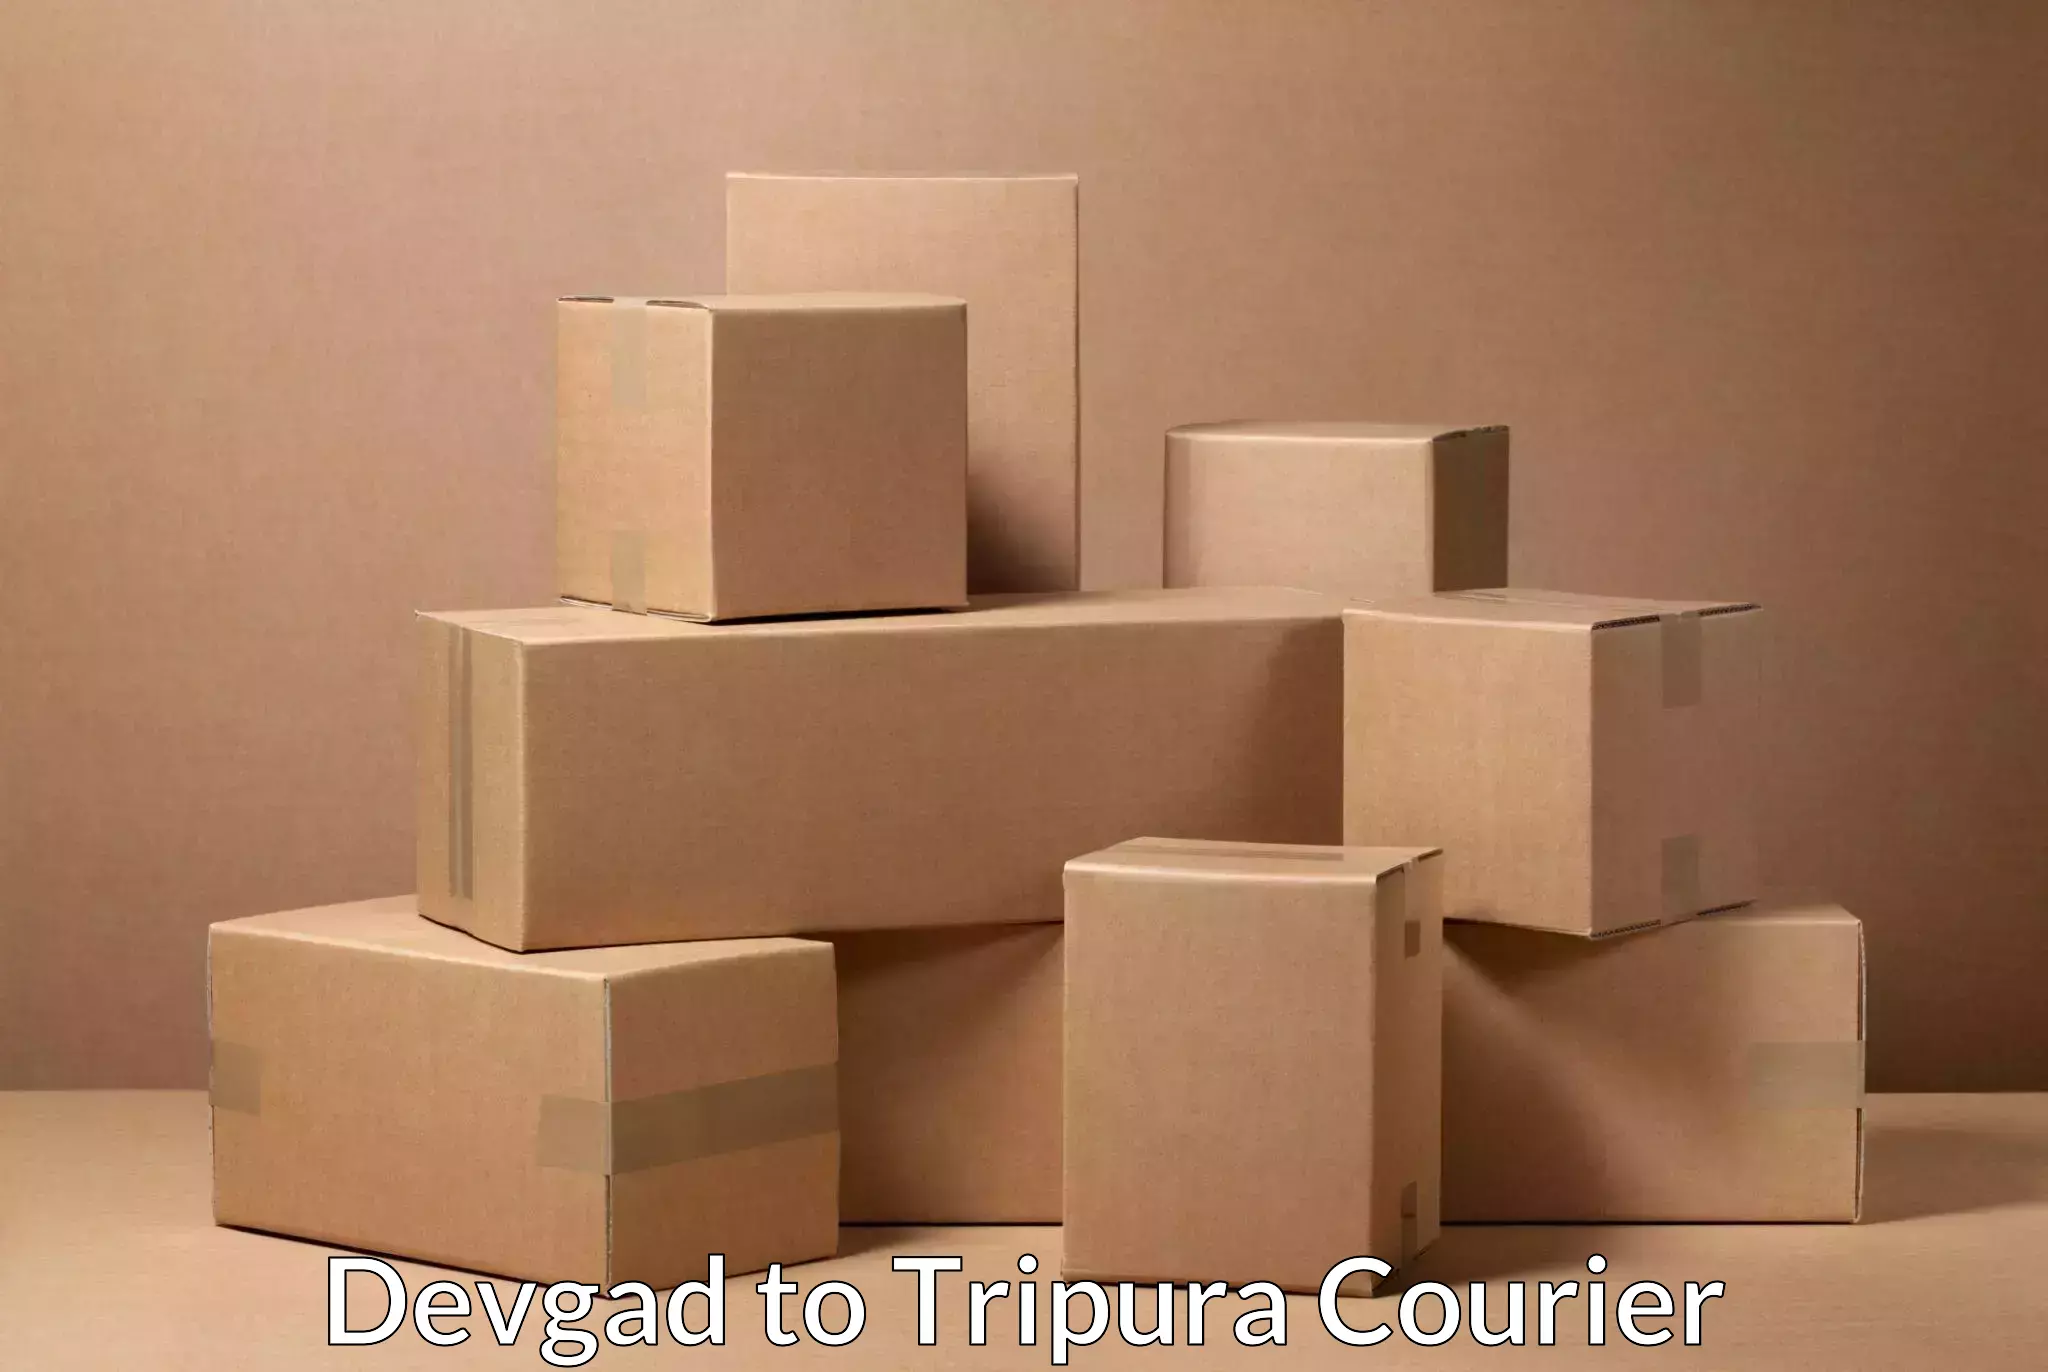 Express postal services Devgad to Udaipur Tripura